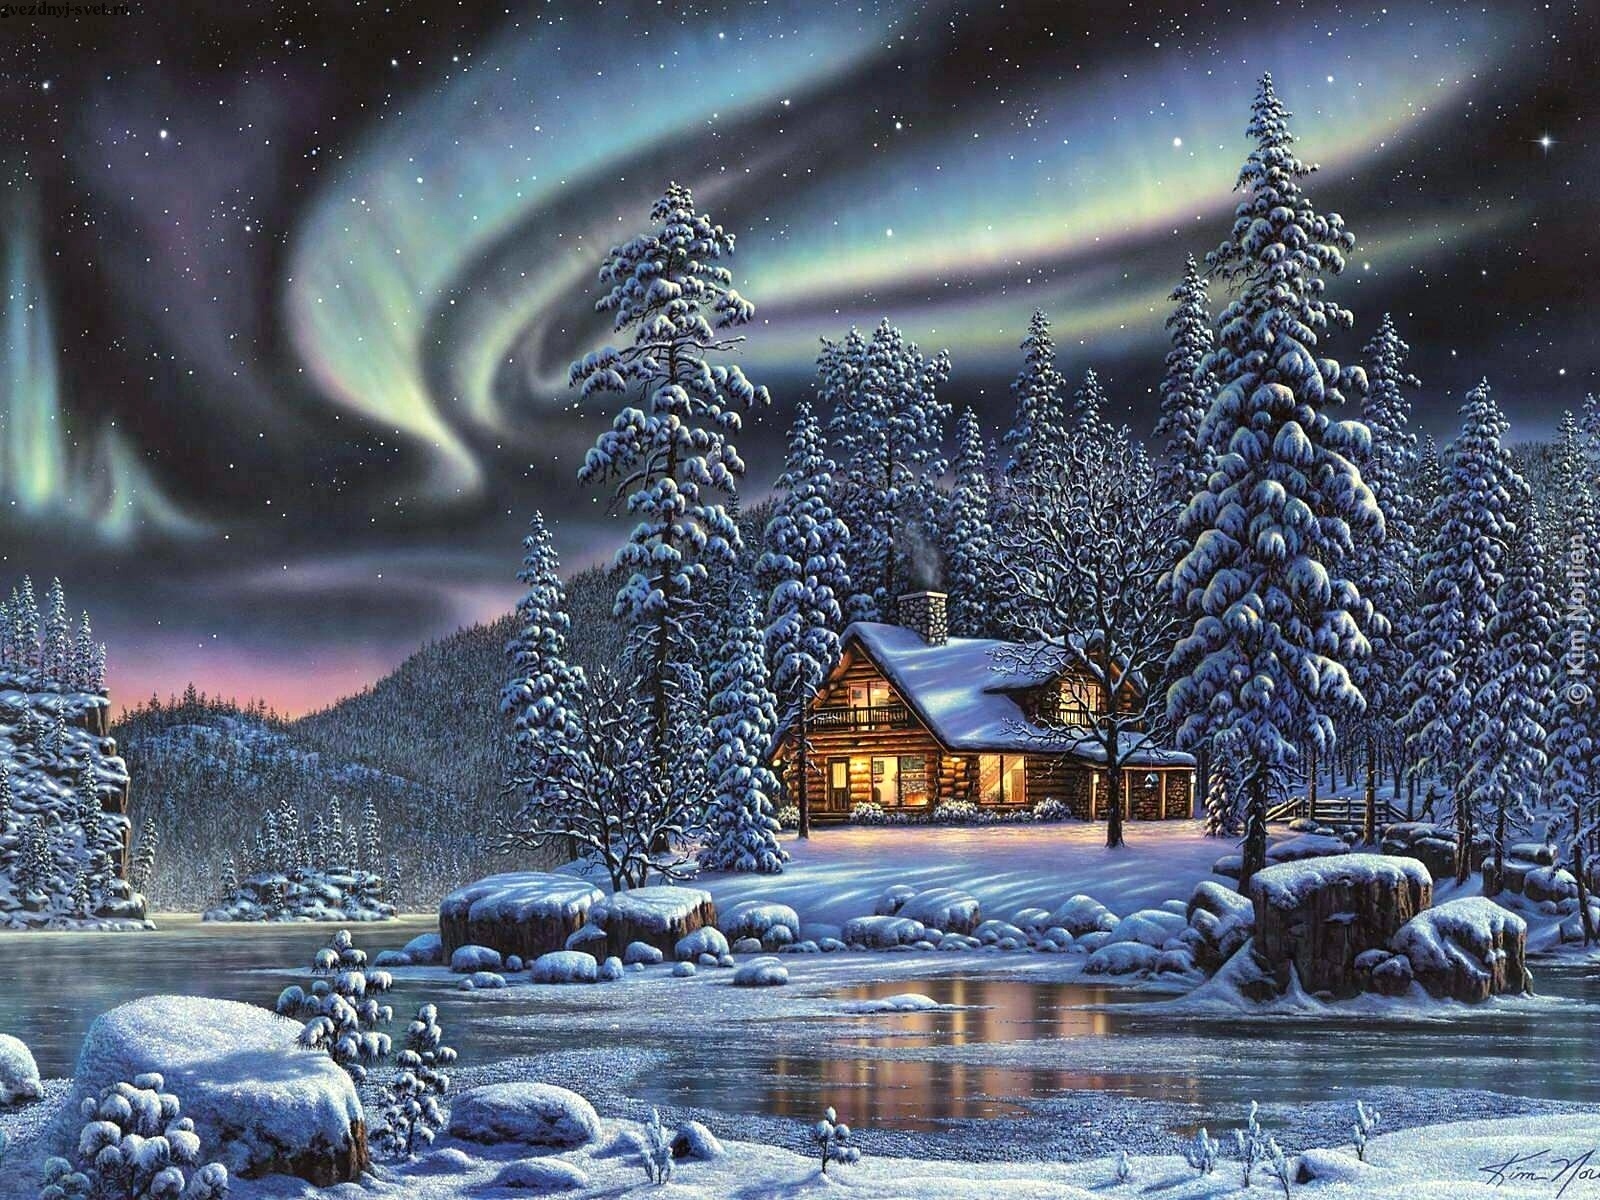  fi artistic art landscapes nature winter seasons holidays christmas